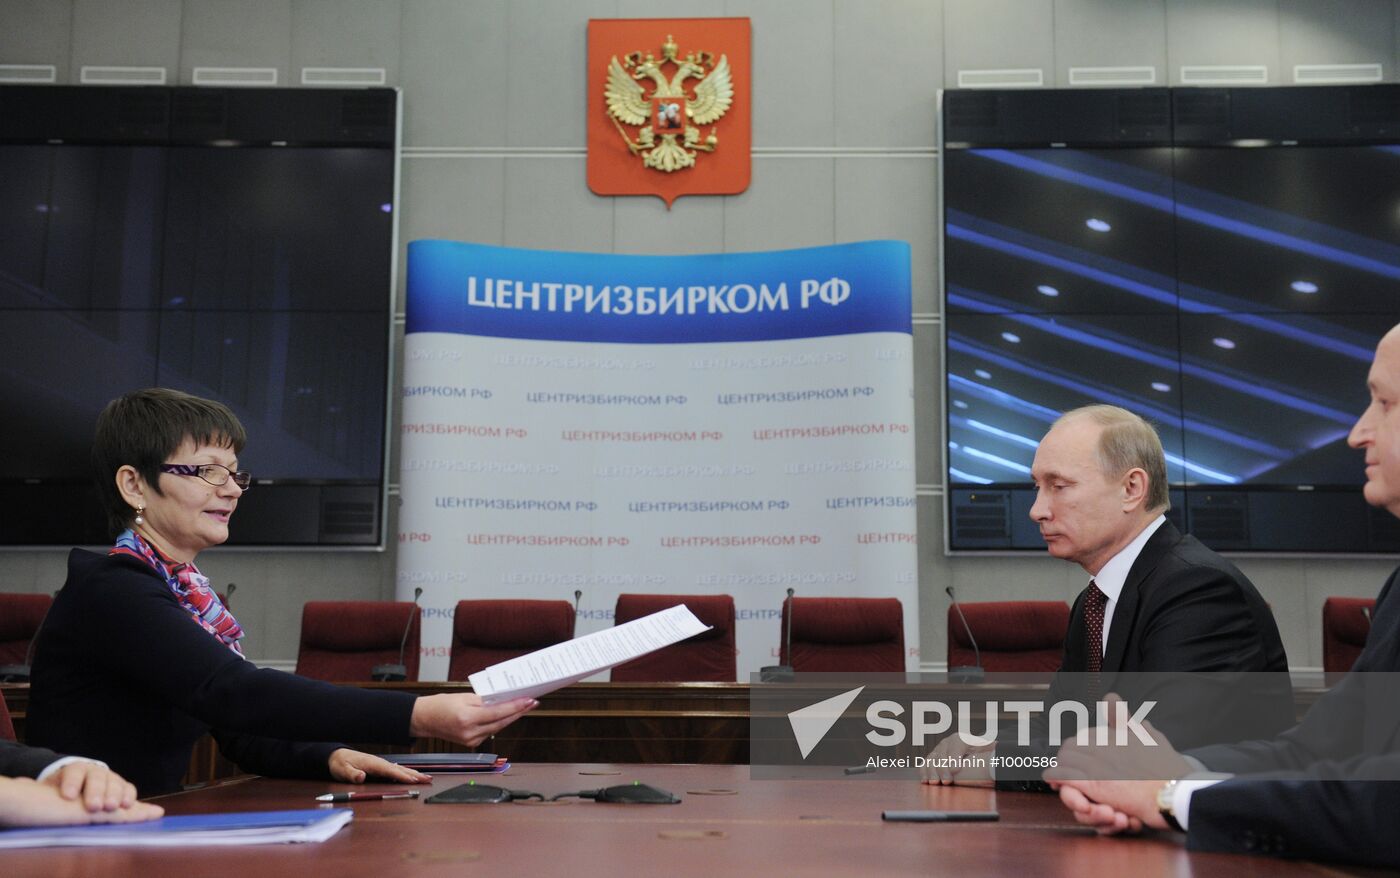 Vladimir Putin submits his registration documents